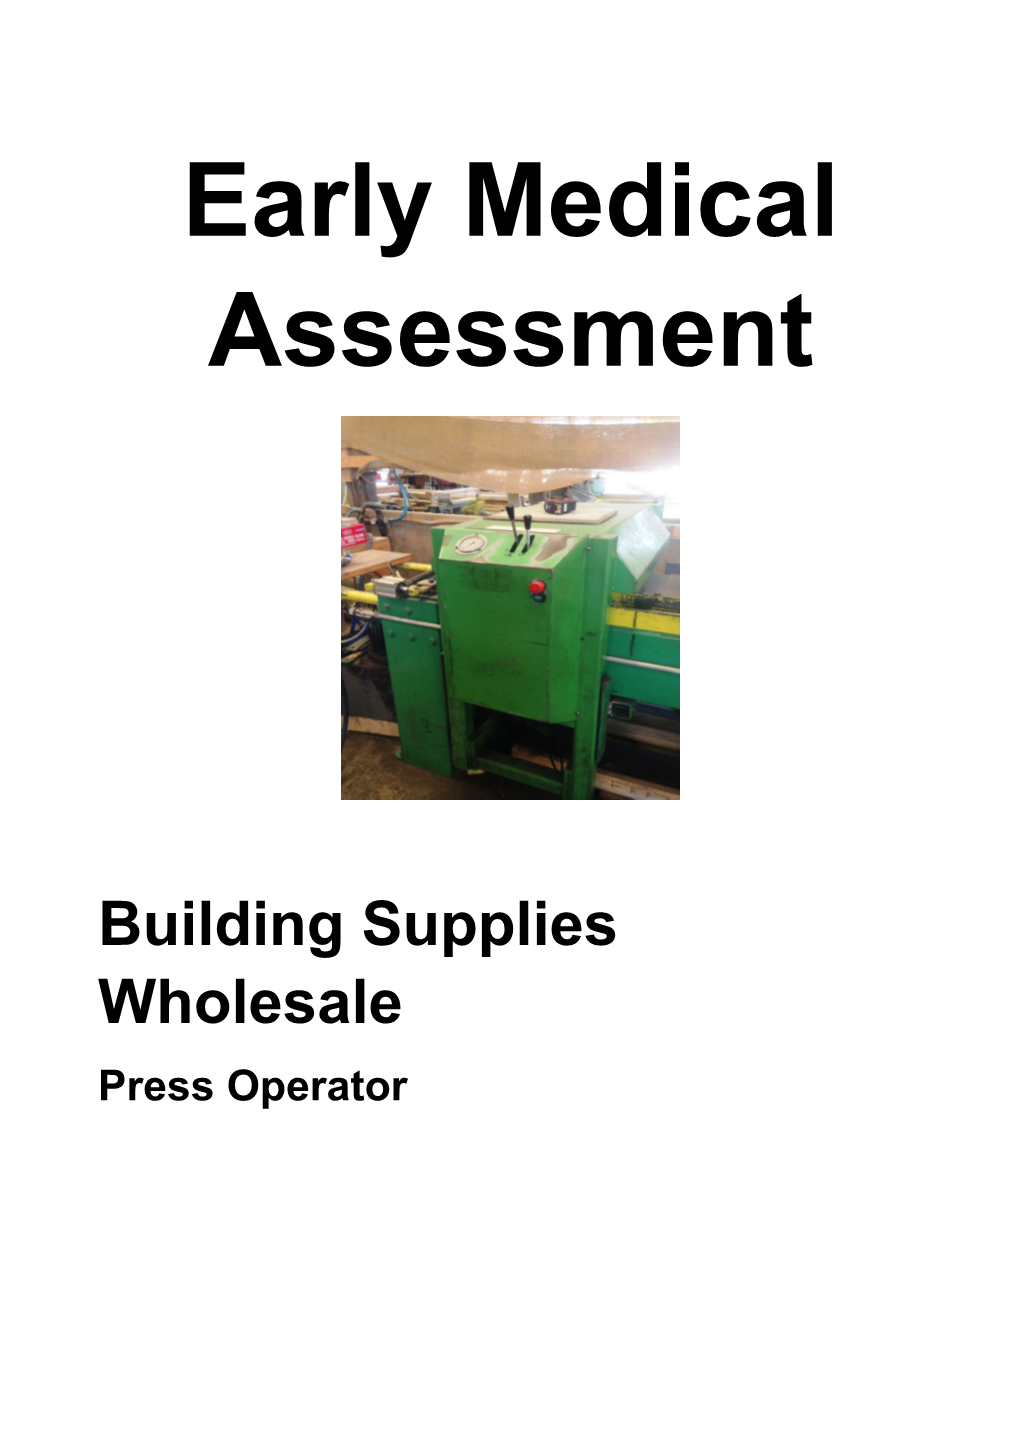 Building Supplies Wholesale - Press Operator